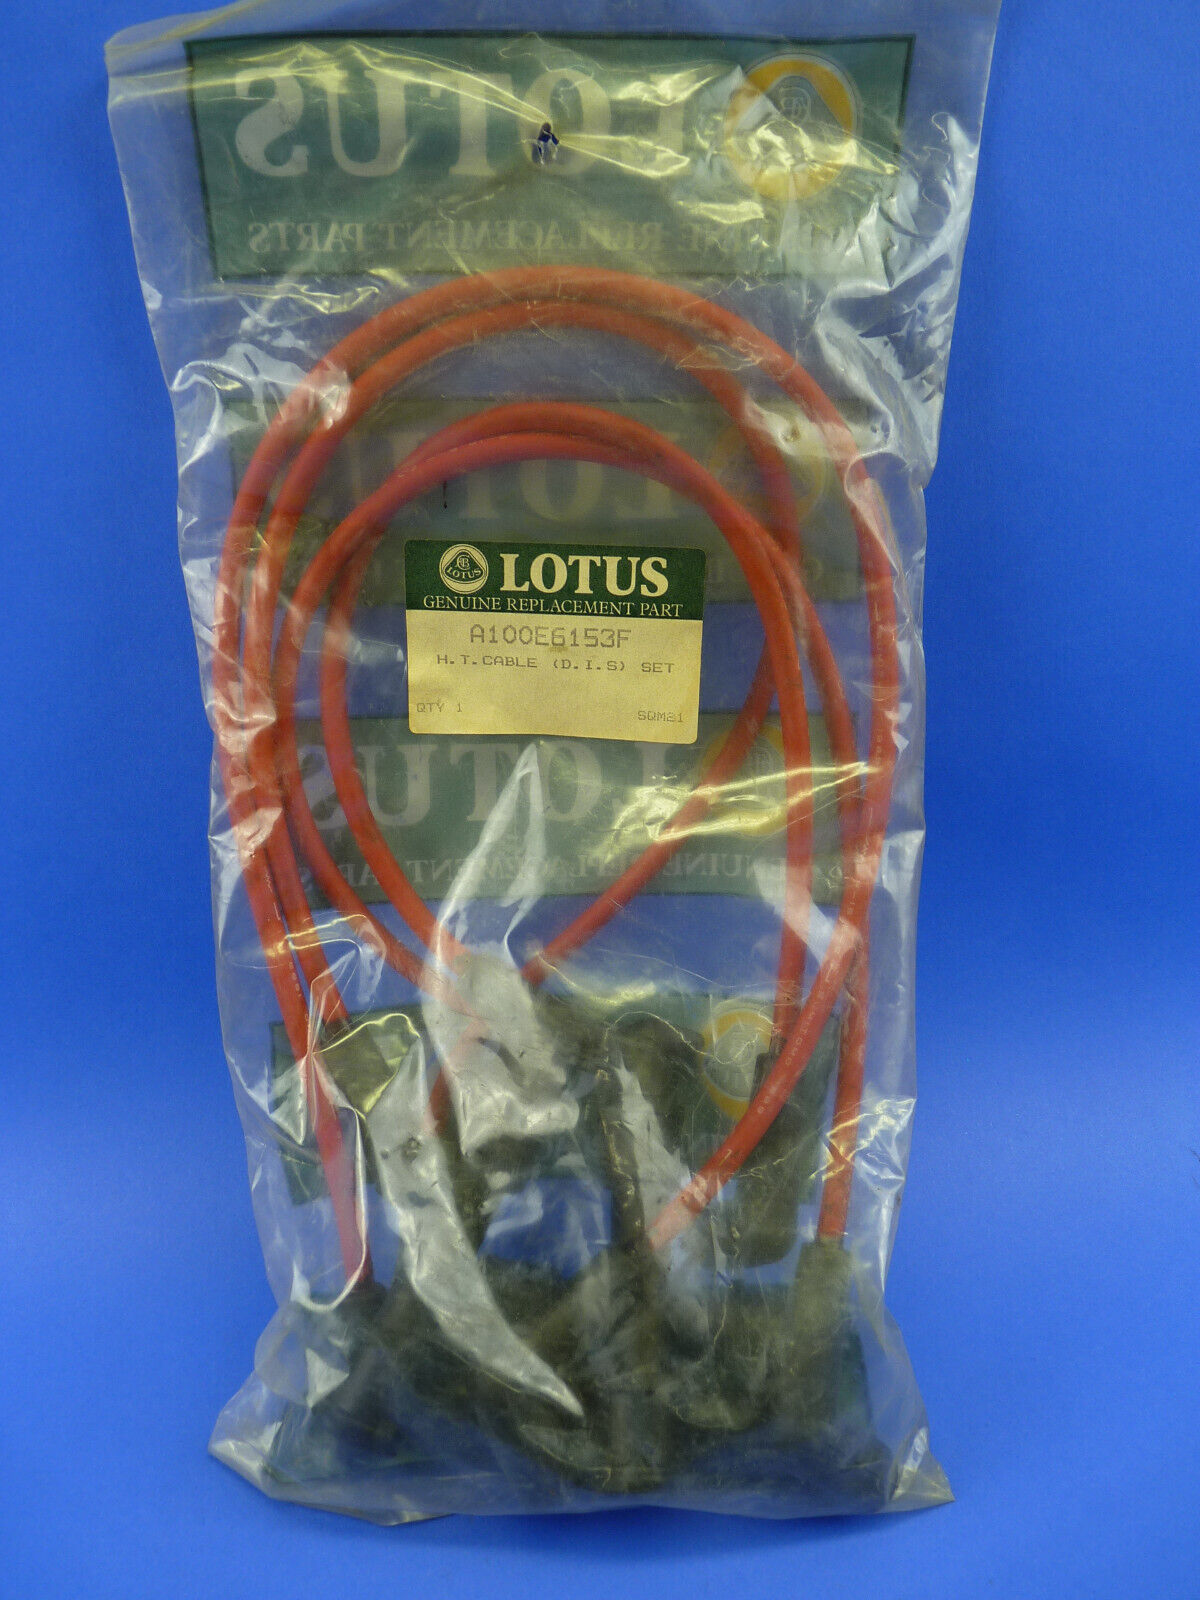 Lotus Elan NOS ignition wire set high tension cable DIS A100E6153F